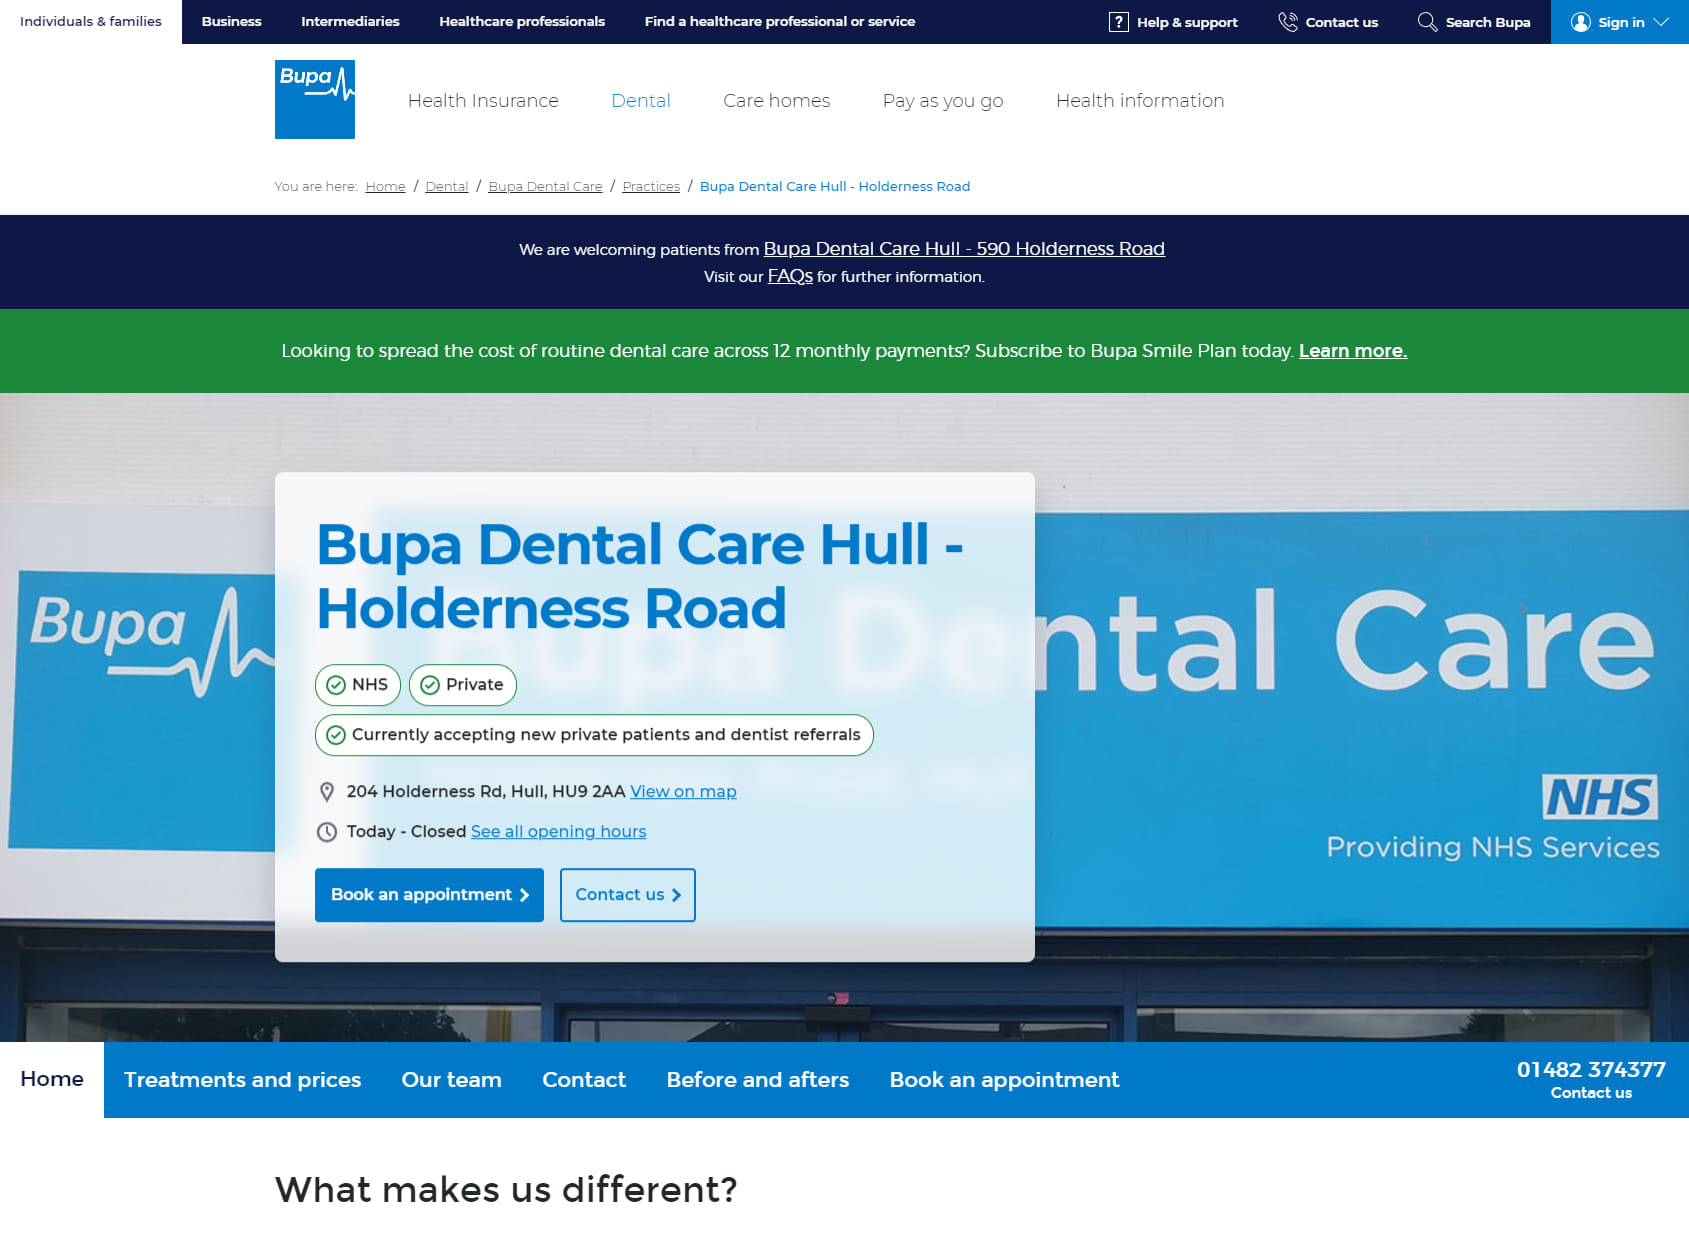 Bupa Dental Care Hull - Holderness Road